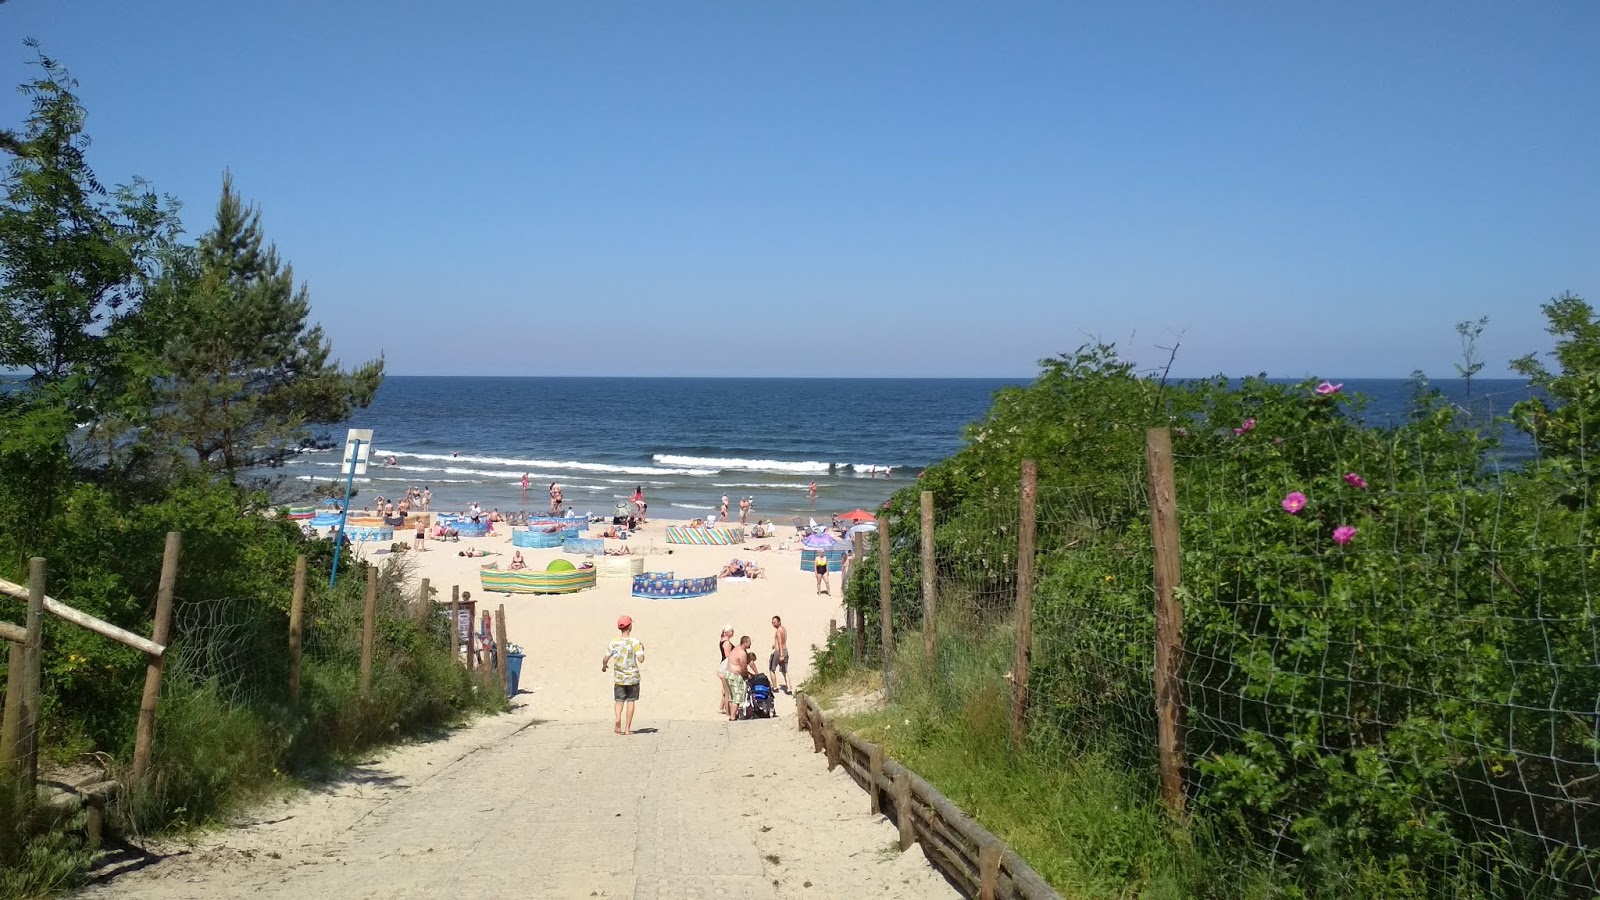 Fotografie cu Stegna Morska beach - locul popular printre cunoscătorii de relaxare